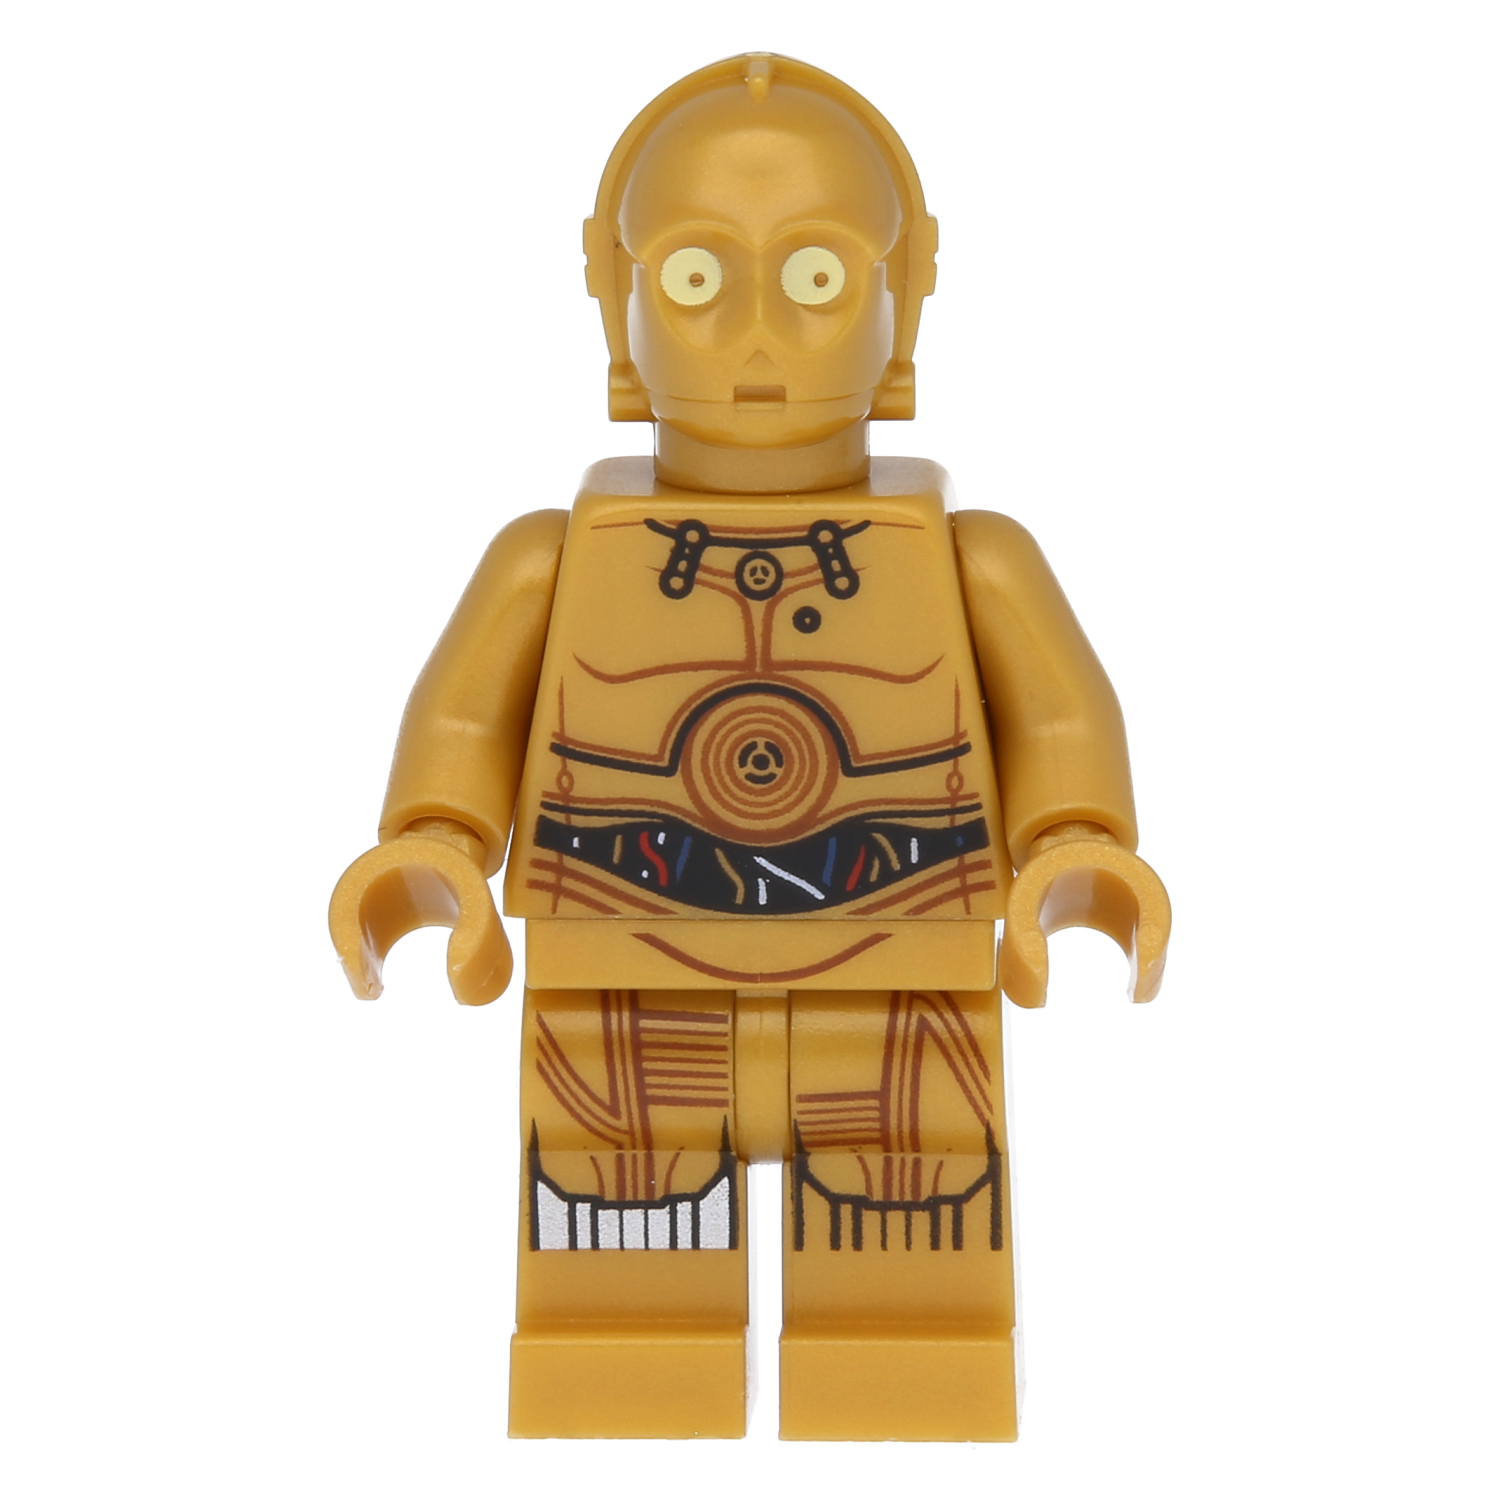 LEGO Star Wars Minifigure - C-3PO (Printed Legs)